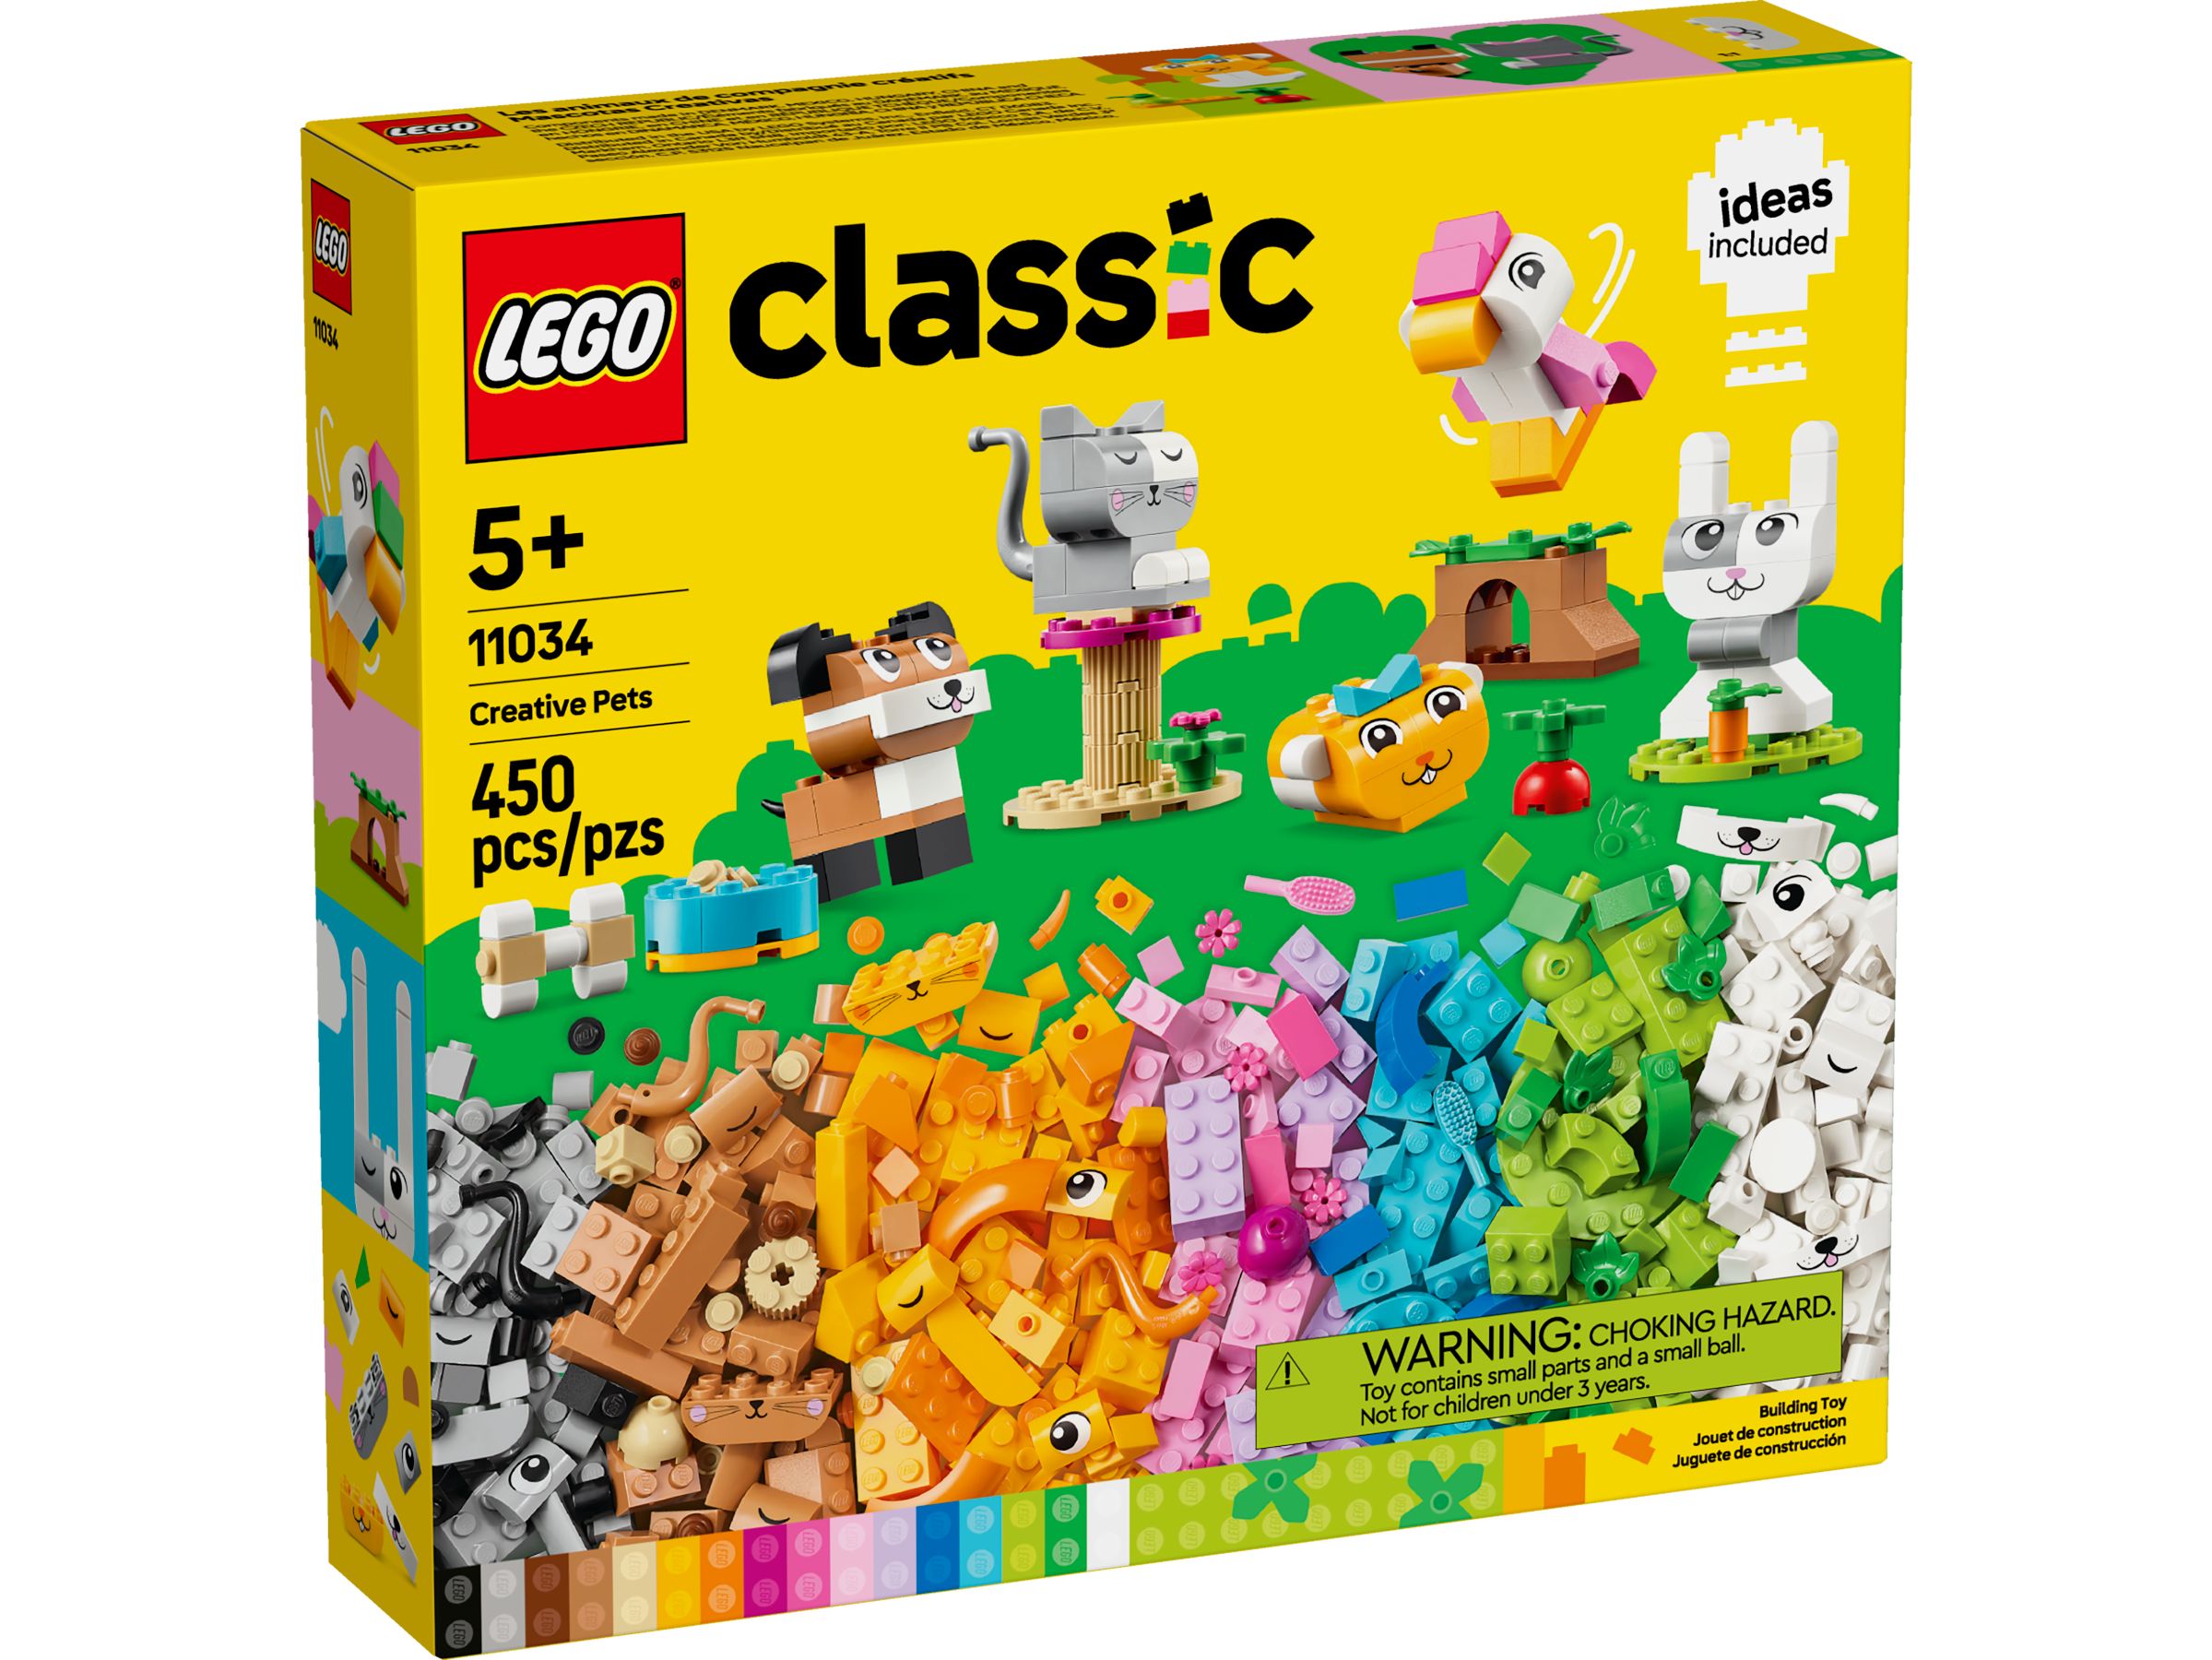 LEGO Classic 11034 Kreative Tiere LEGO_11034_Box1_v39.jpg